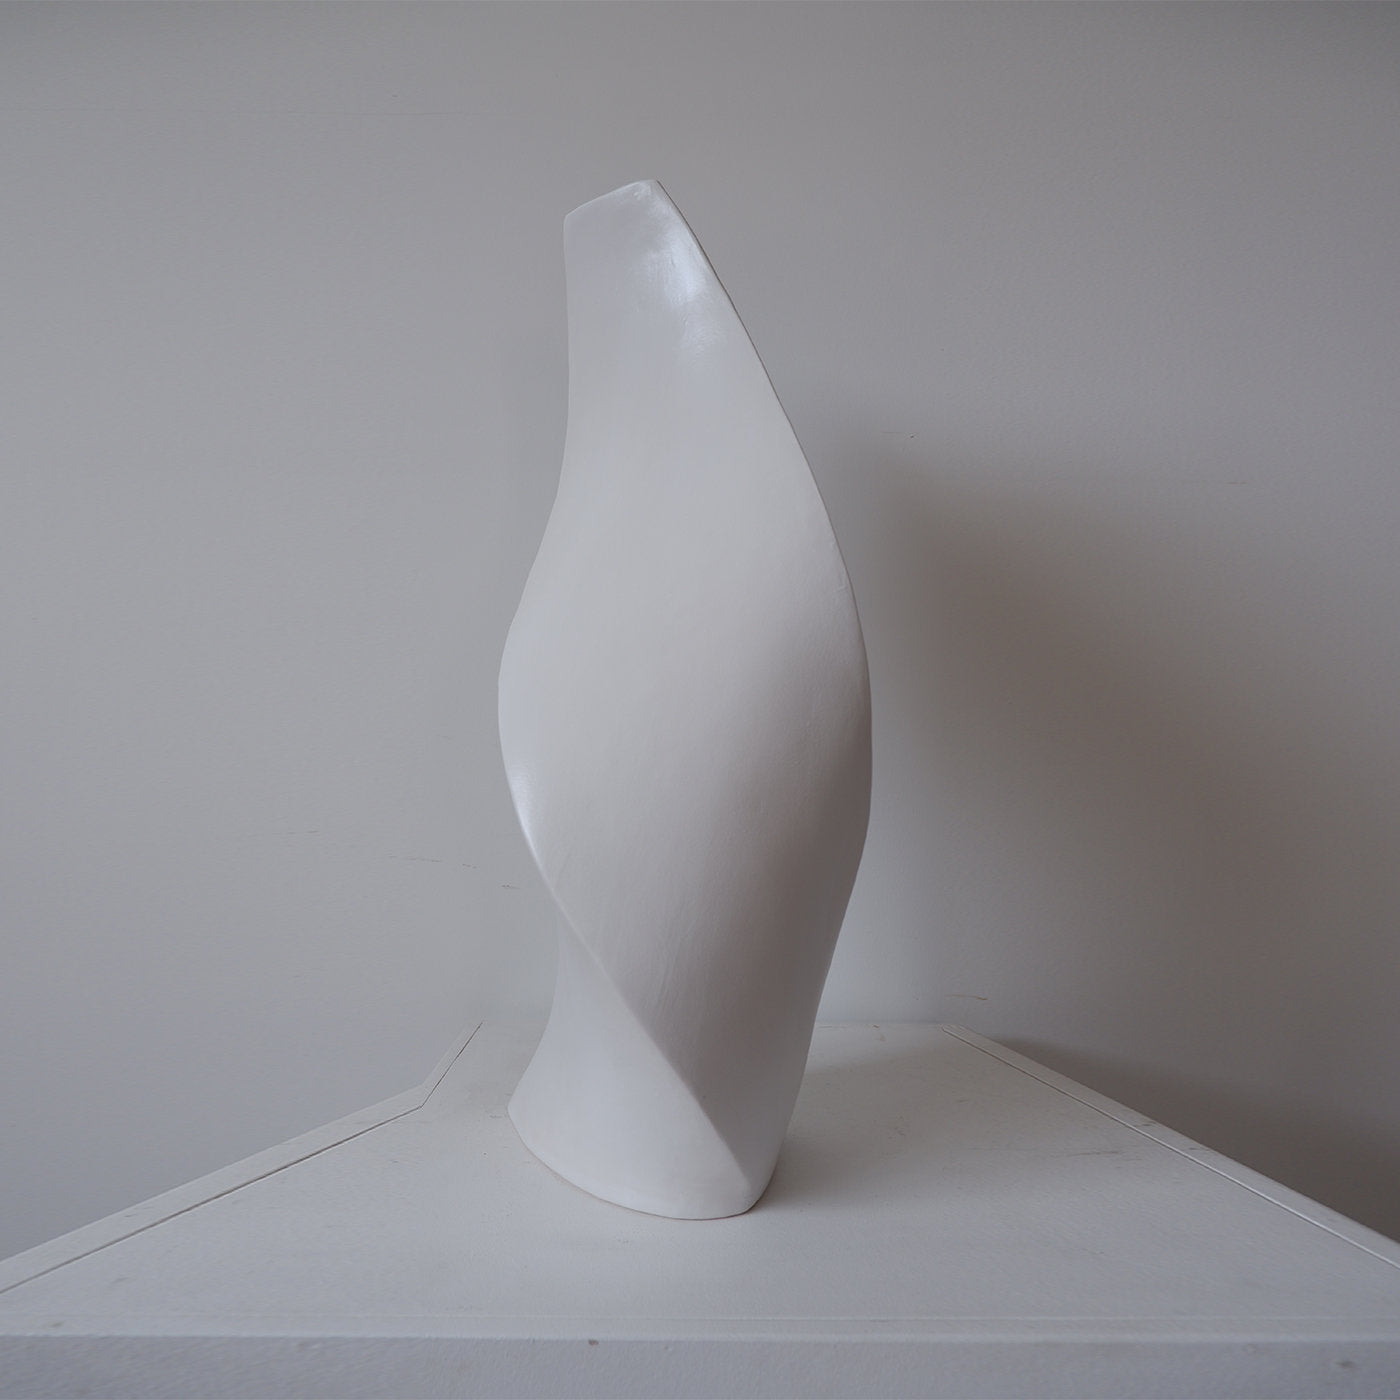 White Demeter Vase #1 - Alternative view 1